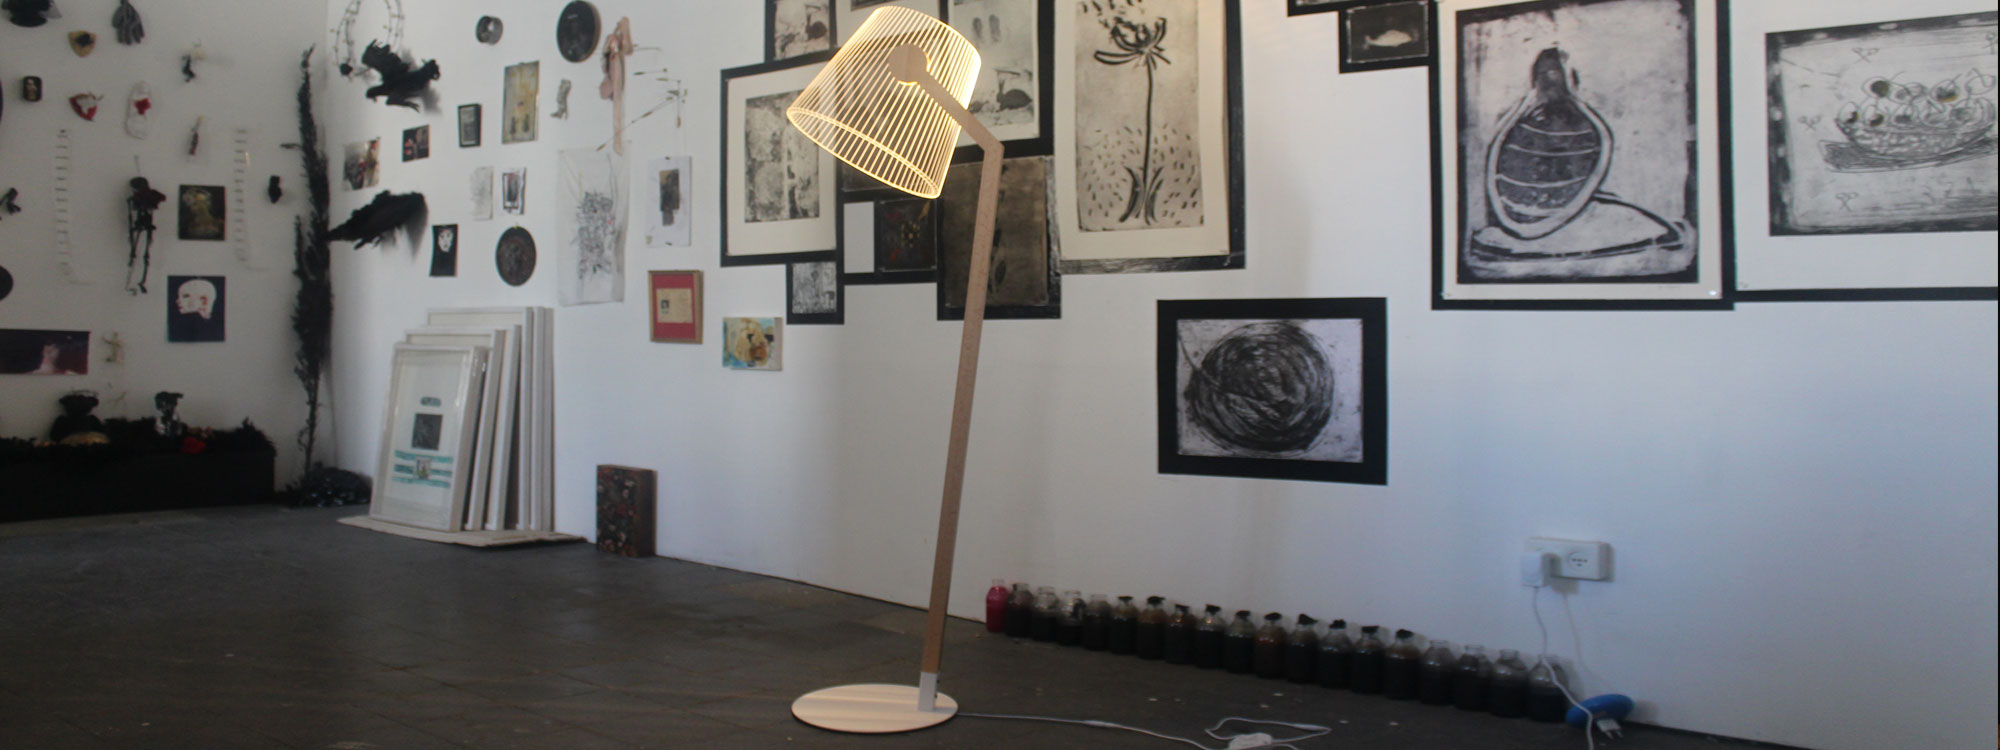 ZIGGI B Standard Lamp From Bulbing Designer LED Lamp Collection By Studio Cheha. Modern Design Table Lamp, Contemporary Floor Lamp, Designer Pendant Light Collection - Unique Designer Gift